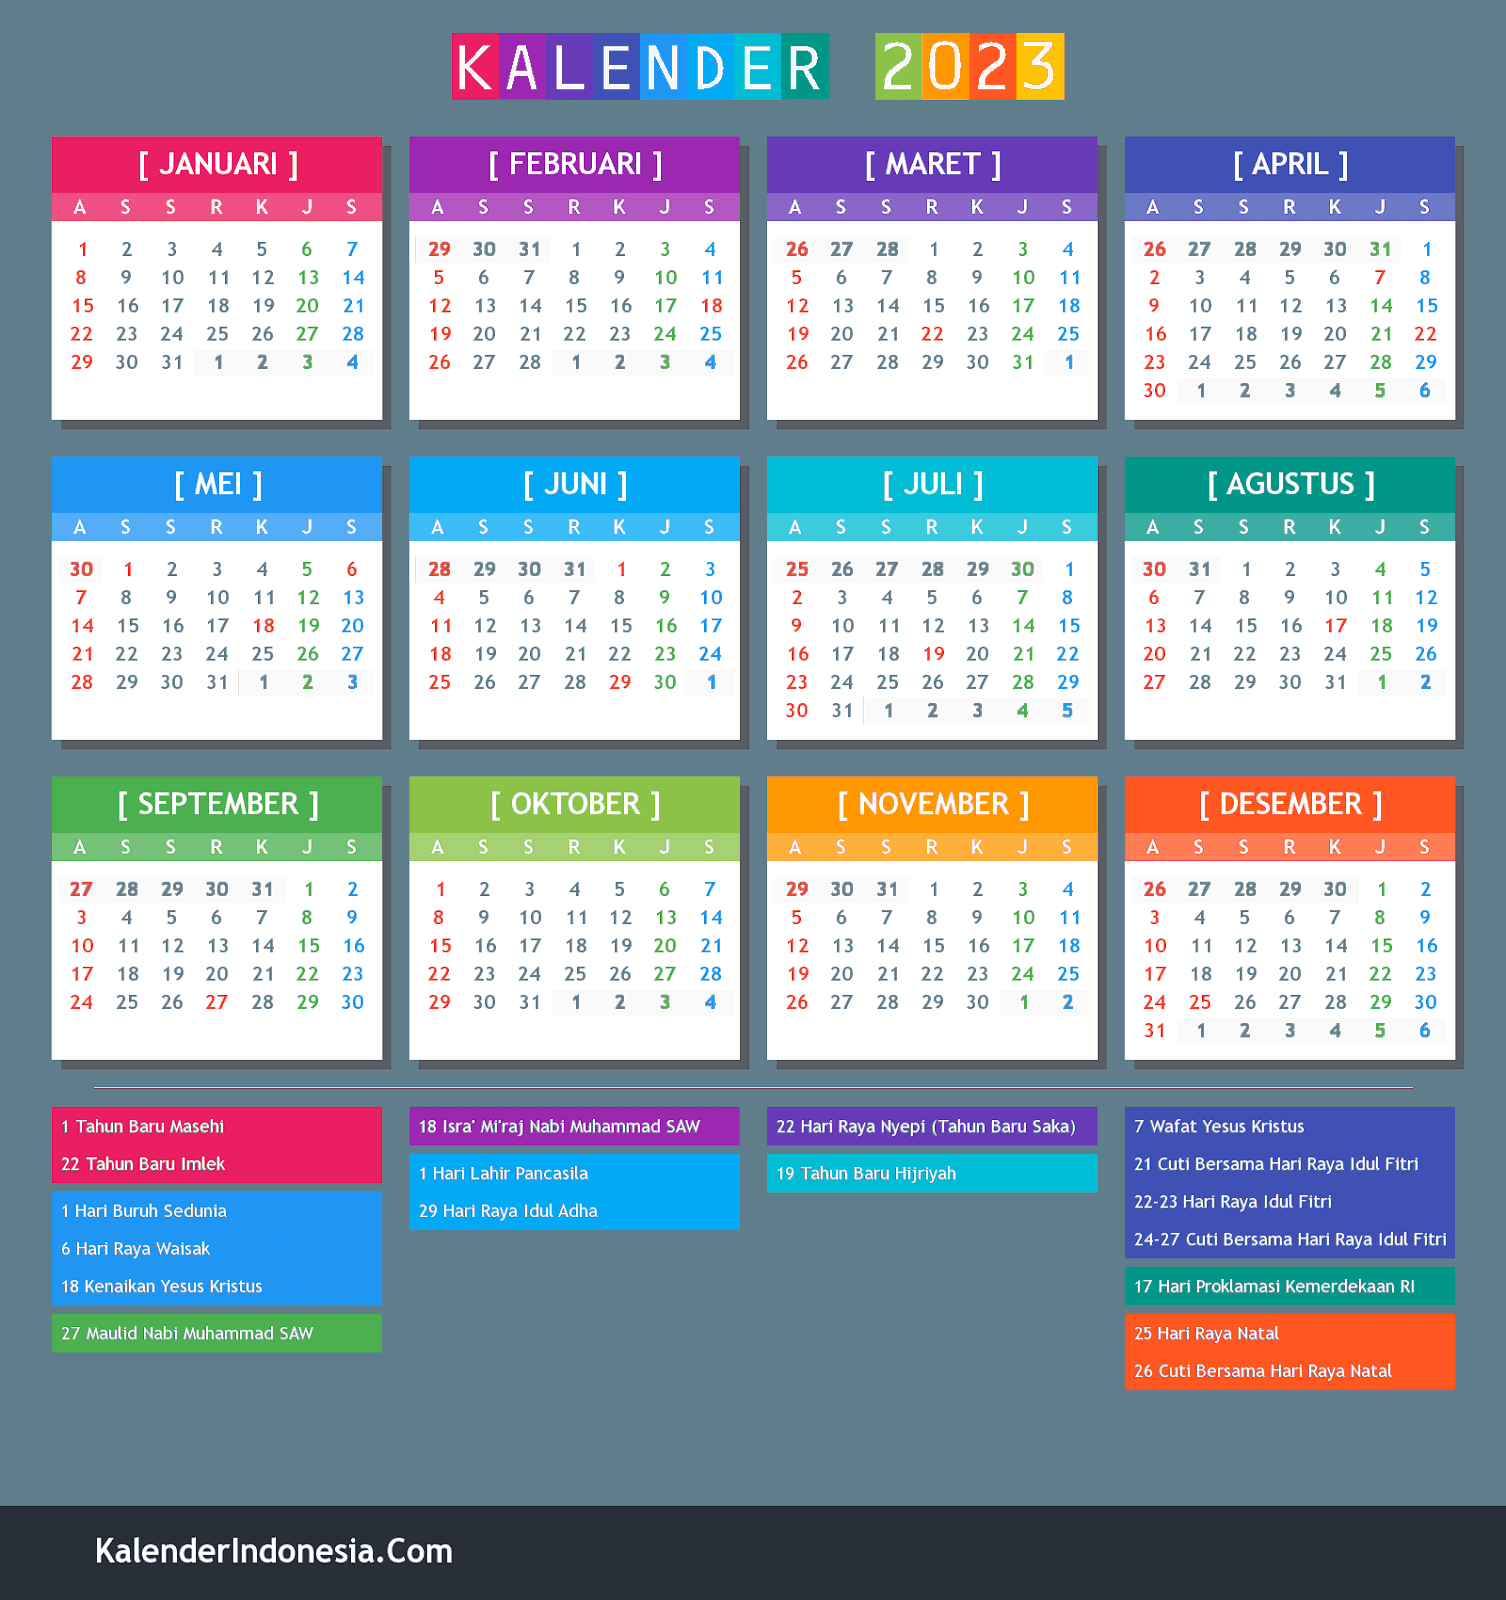 Kalender Indonesia 2023 - Kalender Indonesia